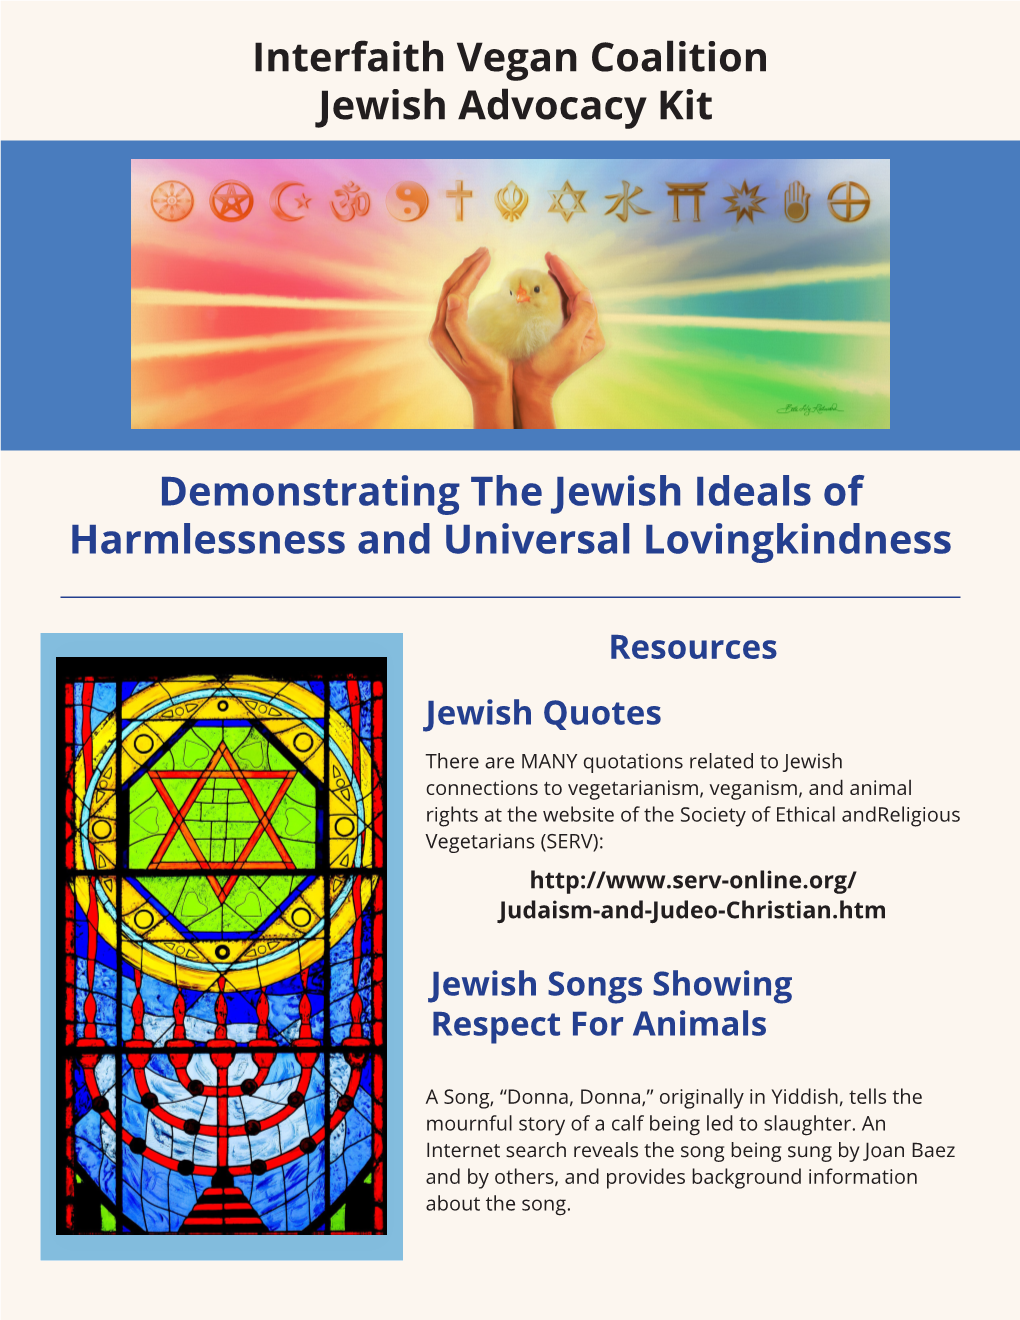 Interfaith Vegan Coalition Jewish Advocacy Kit